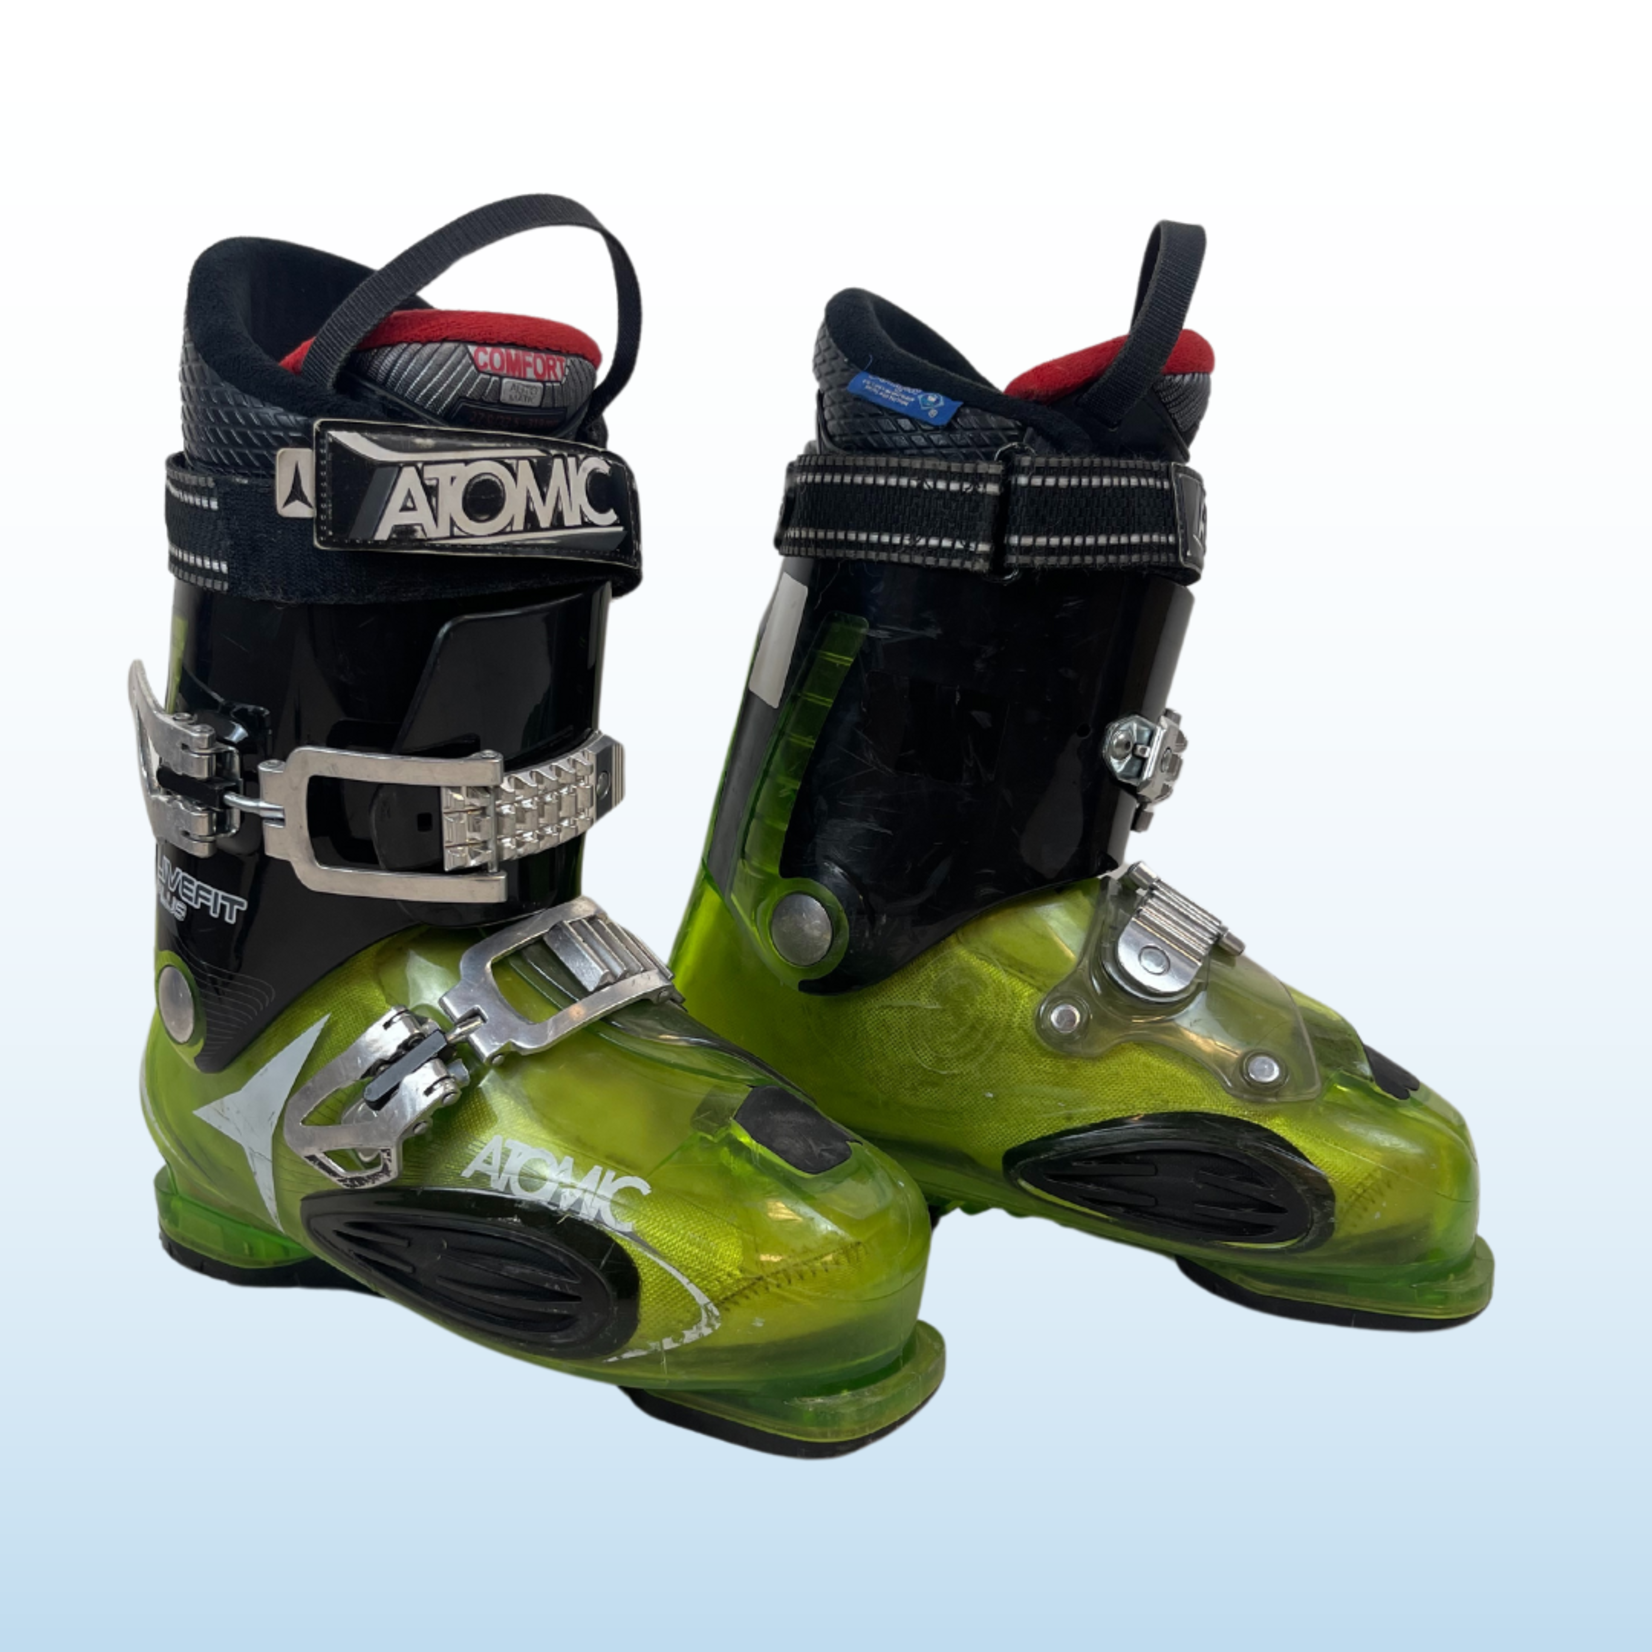 Atomic Atomic Livefit Ski Boots, Size 27/27.5